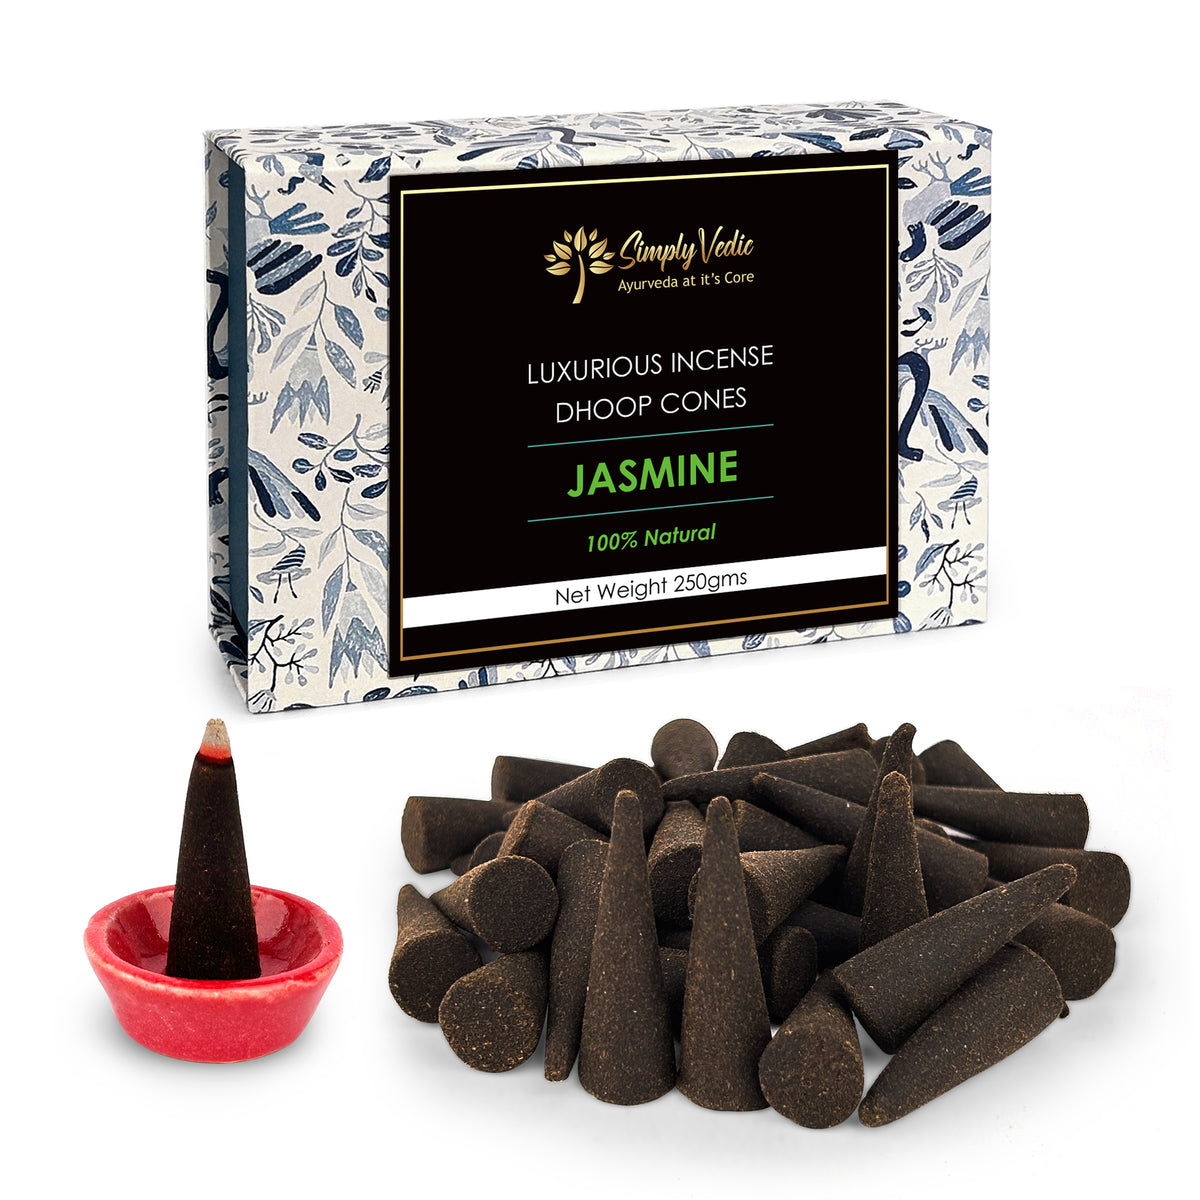 Simply Vedic Jasmine Incense Cones